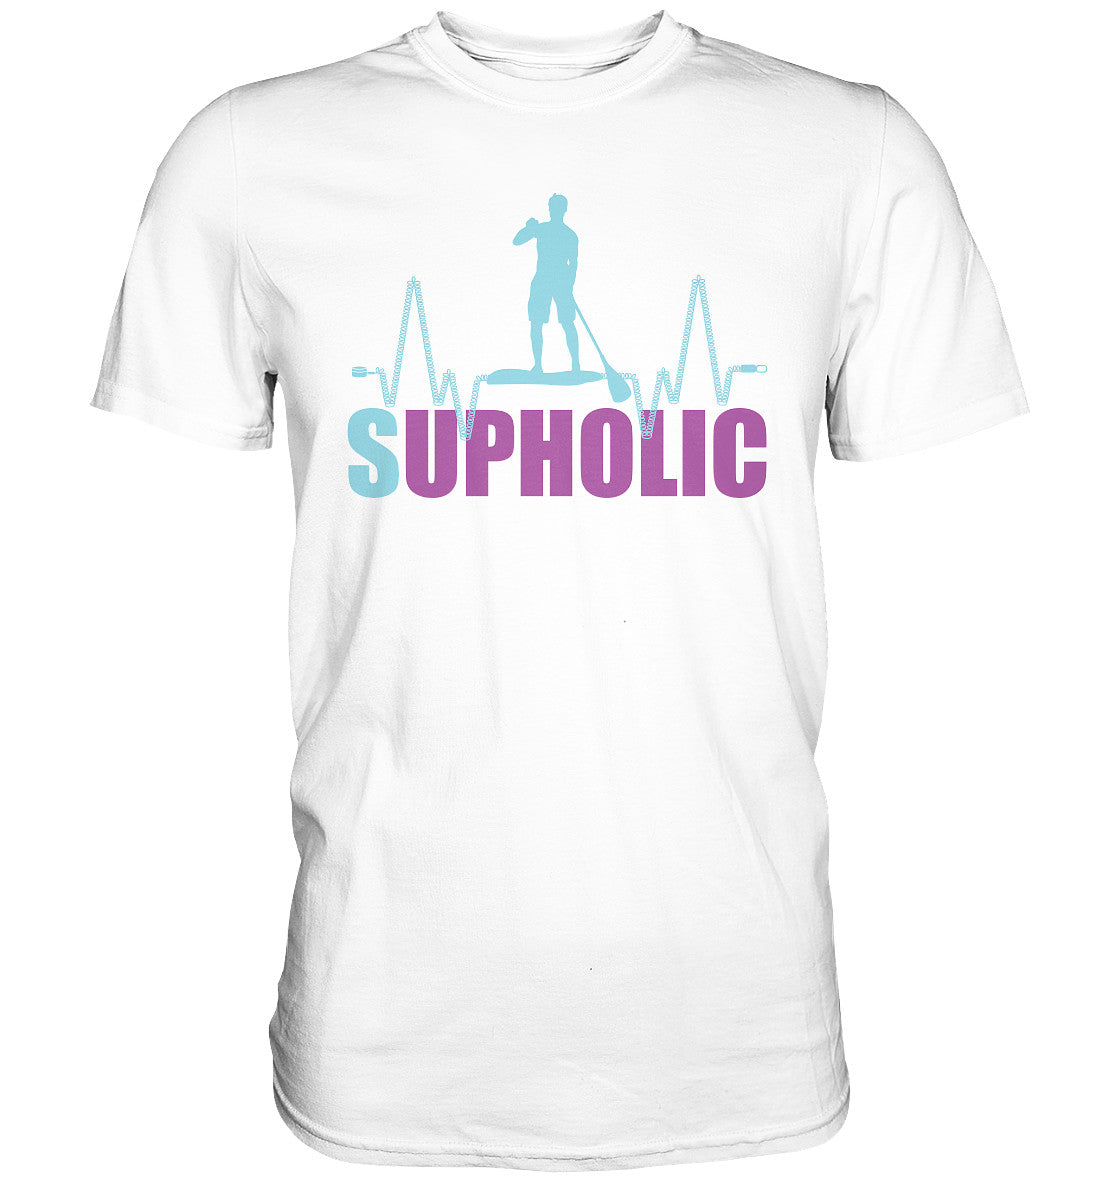 SUPHOLIC Boy - Classic Shirt